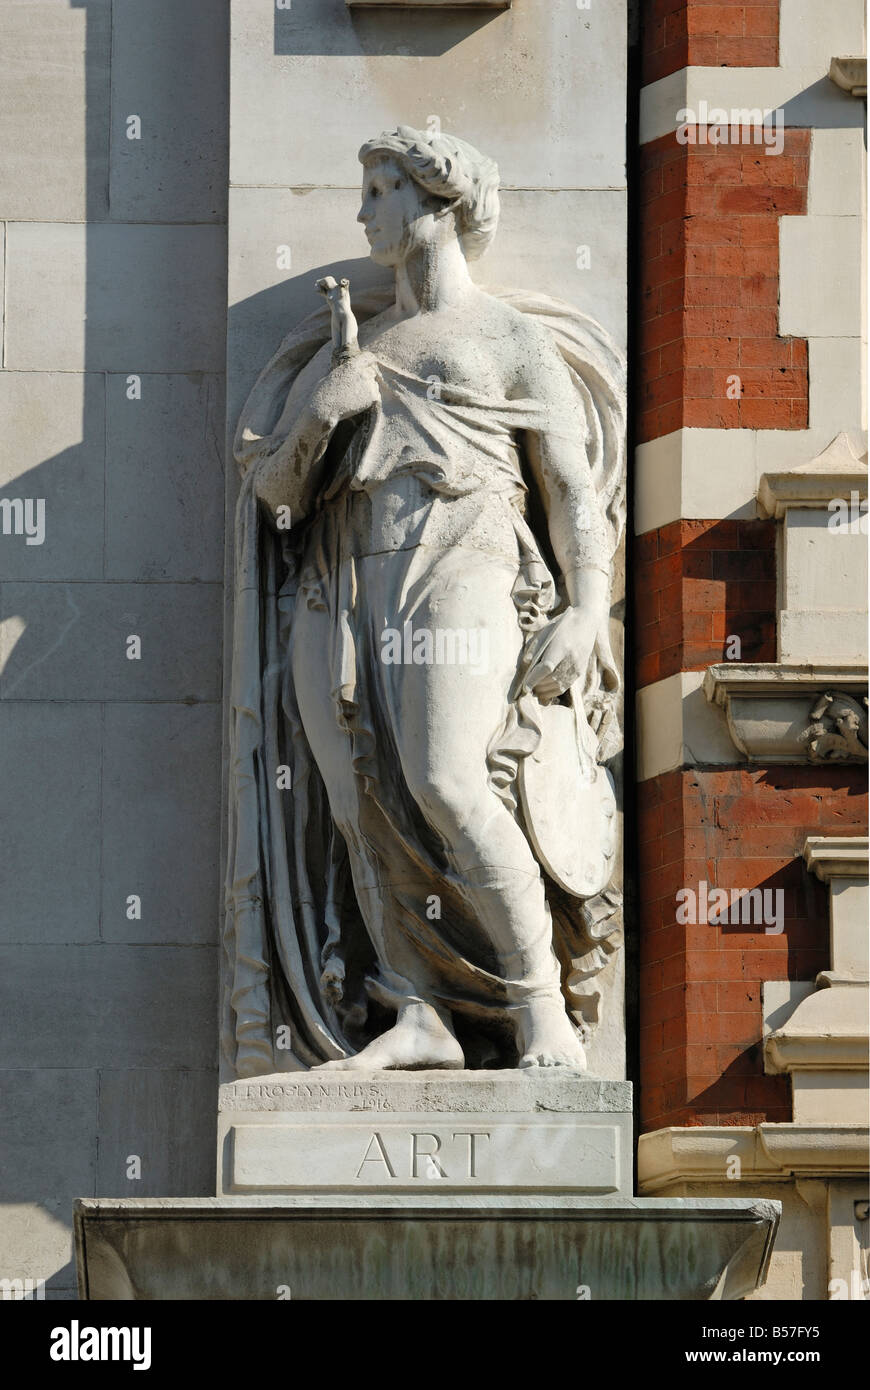 Estatua de arte, New Bond Street, Londres Foto de stock